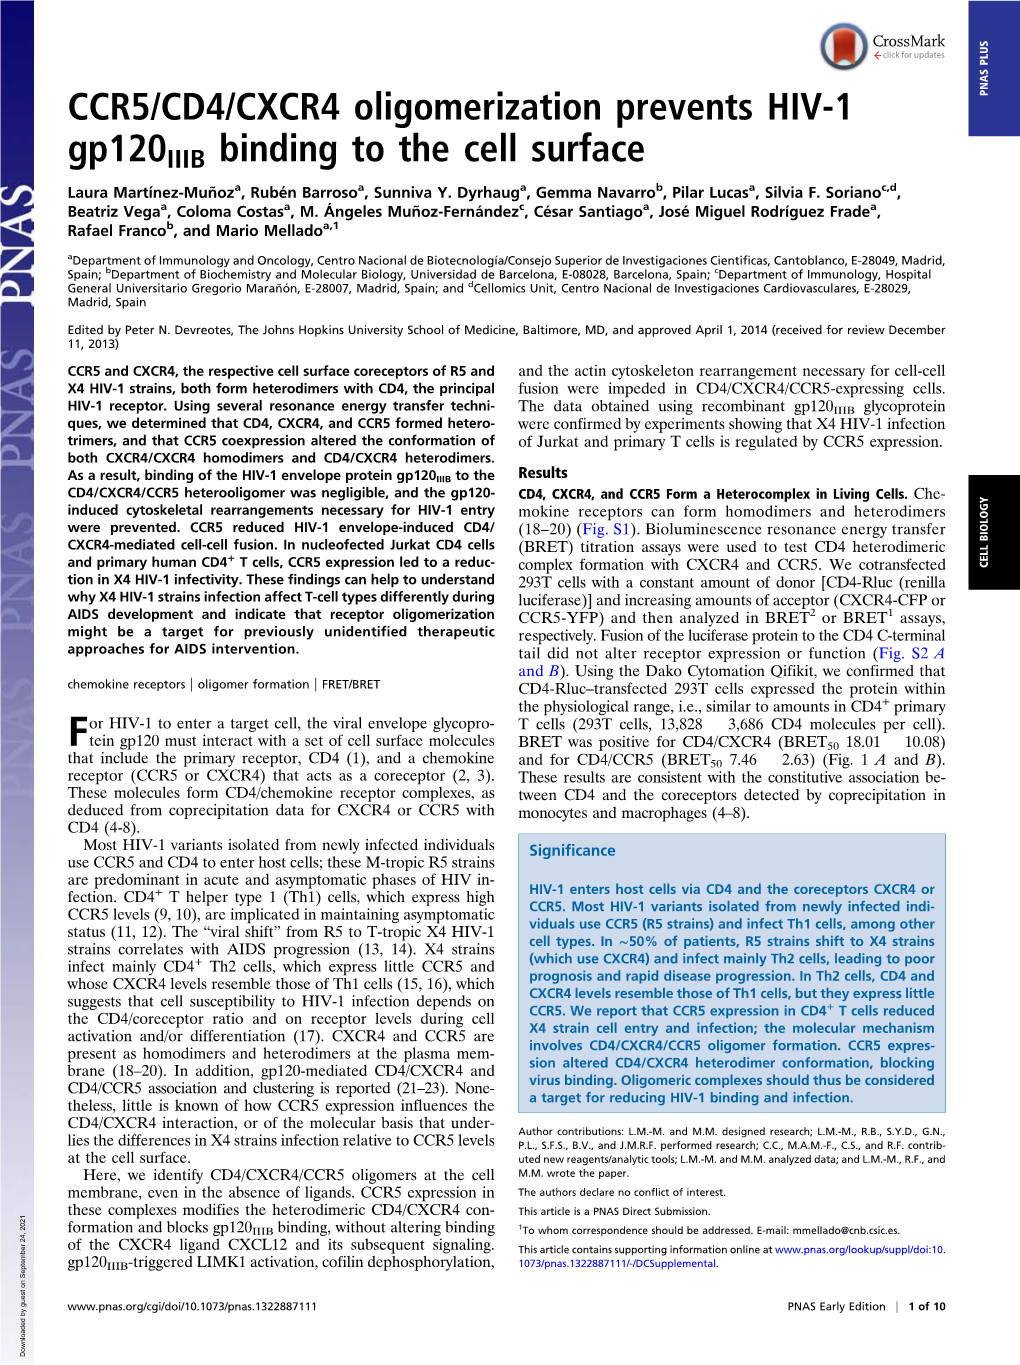 CCR5/CD4/CXCR4 Oligomerization Prevents HIV-1 Gp120iiib Binding To